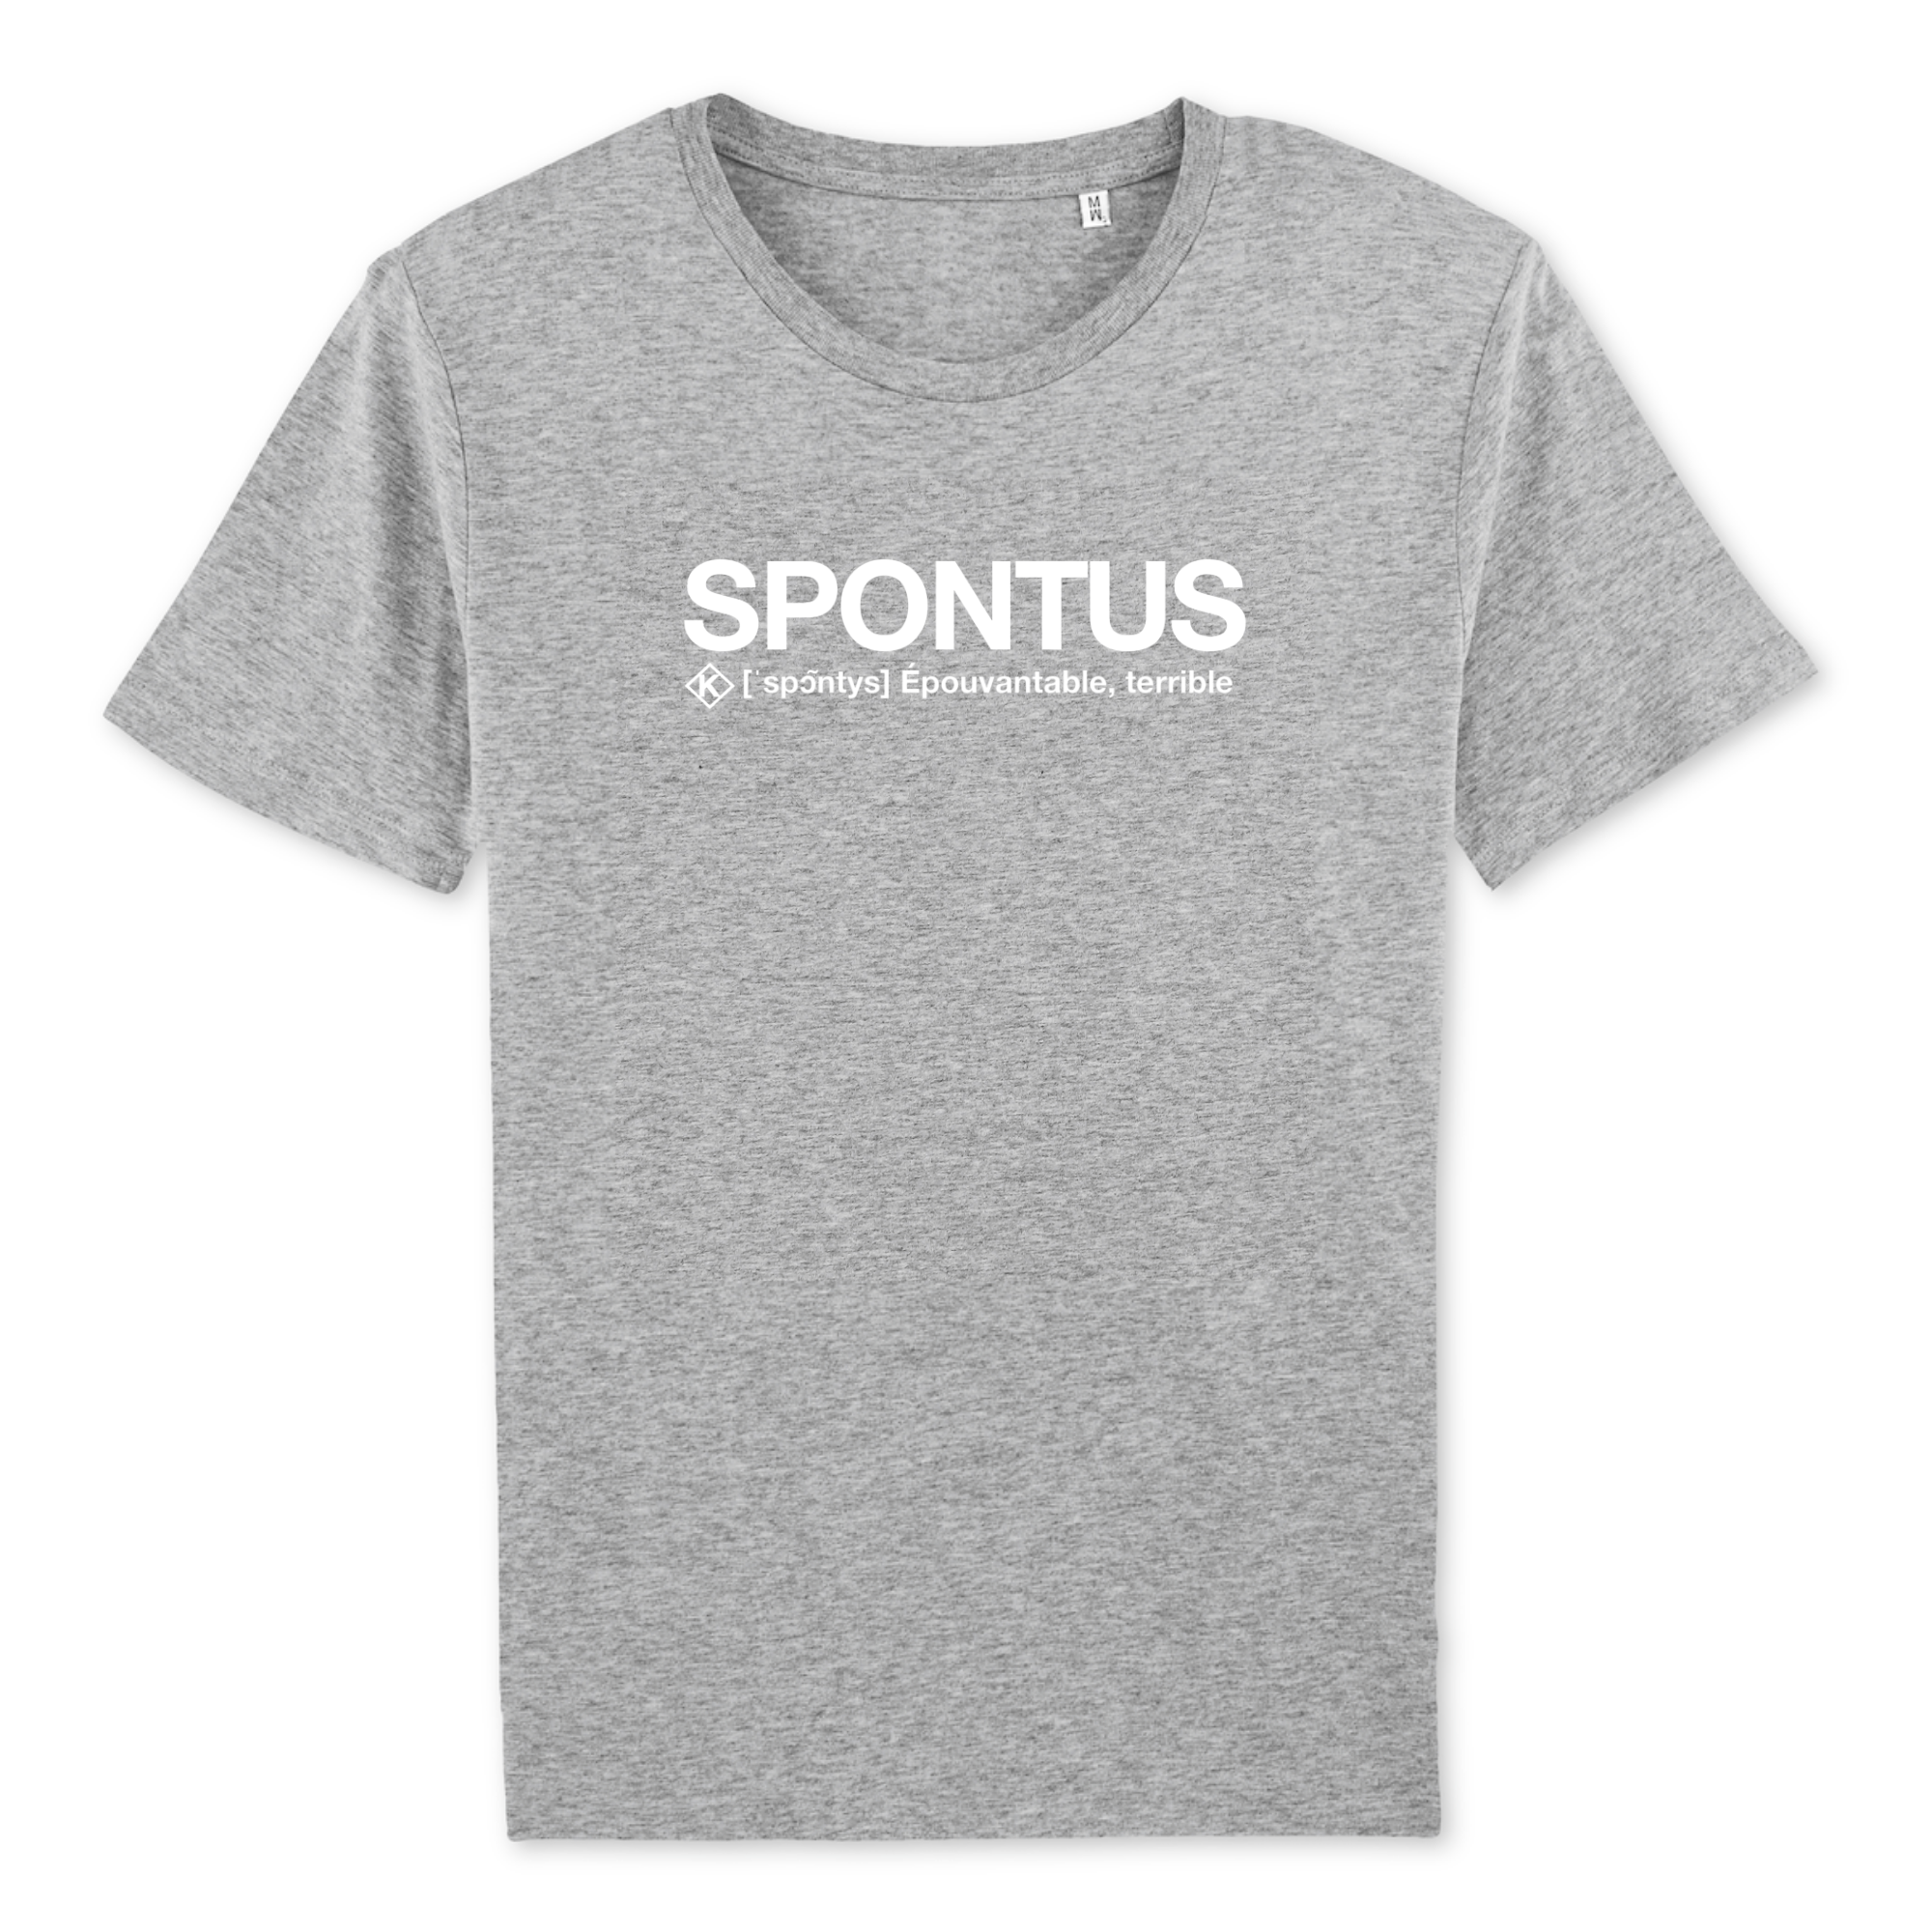 Spontus T-shirt (Épouvantable/Terrible)